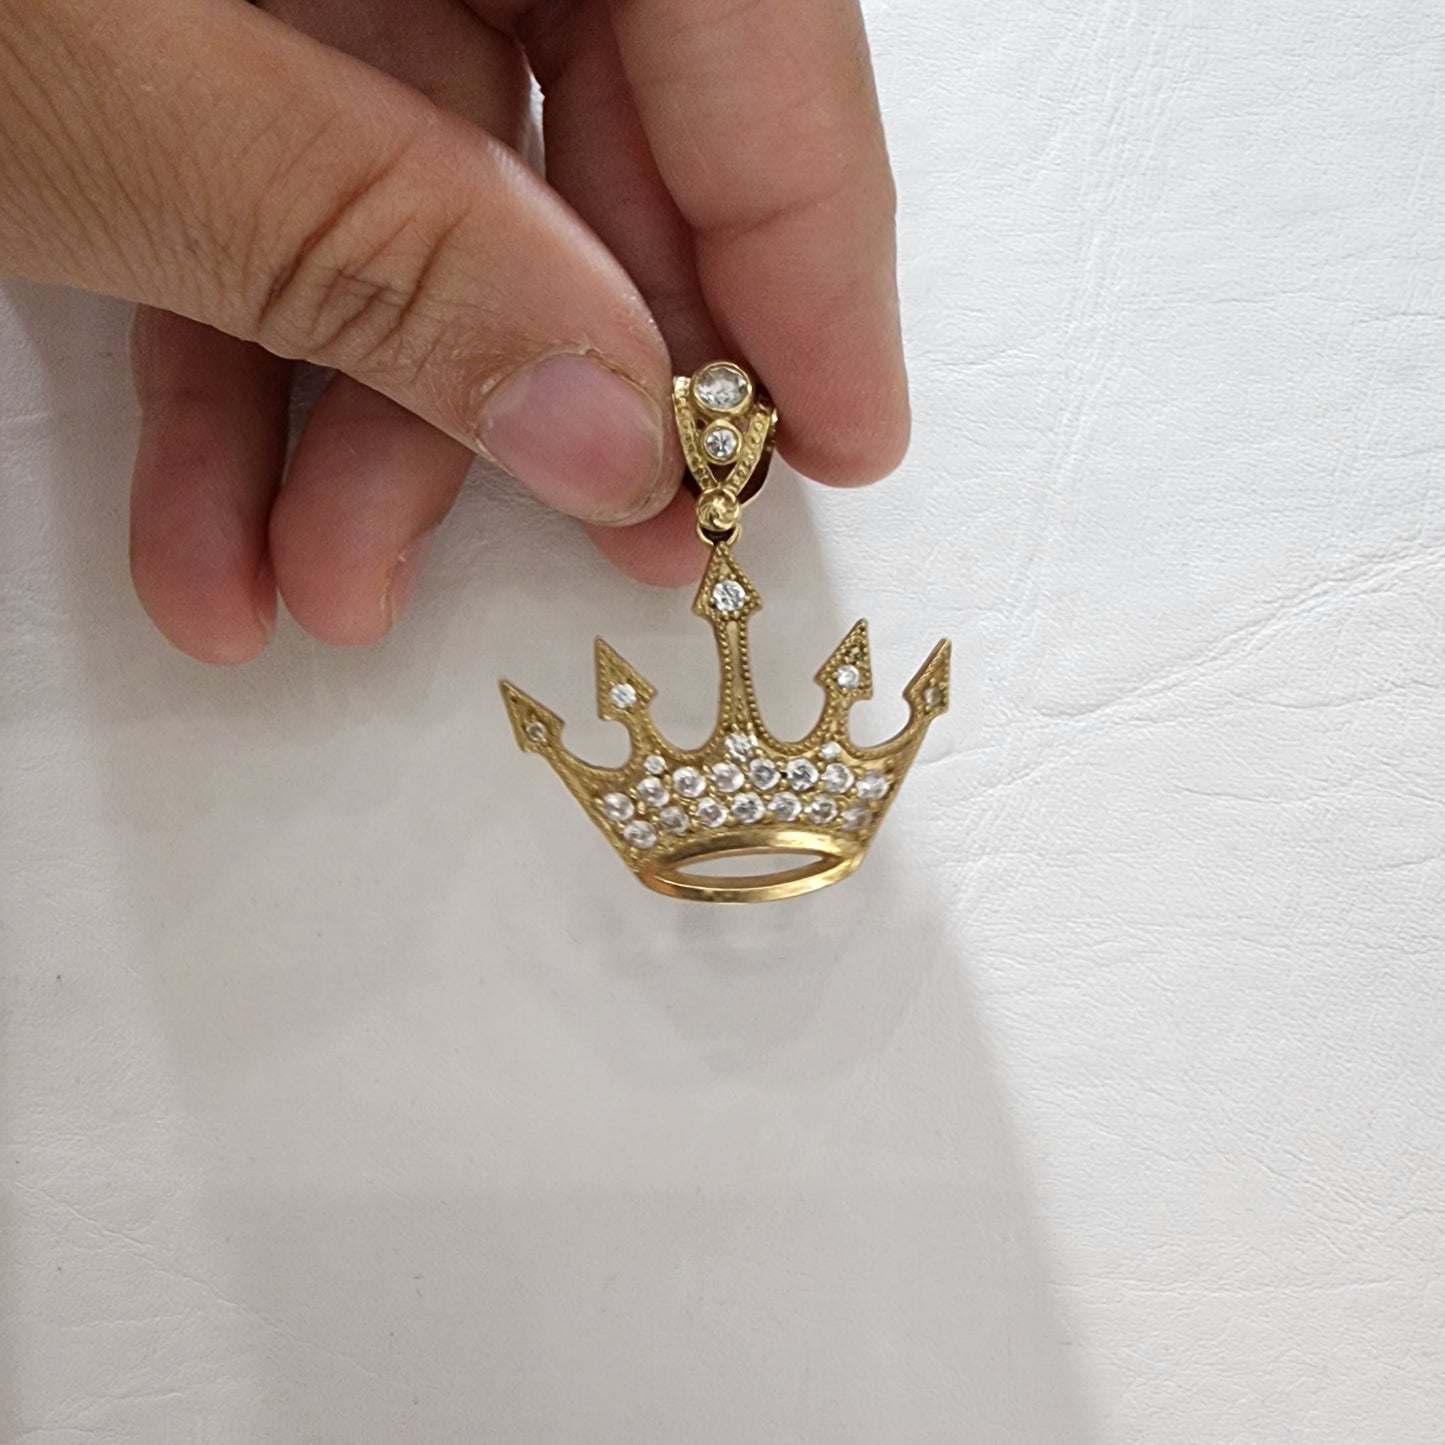 10K Gold Crown Pendant